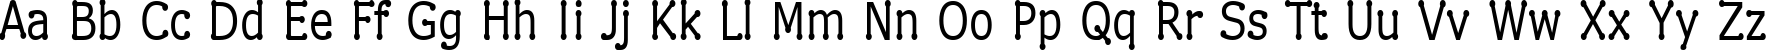 Пример написания английского алфавита шрифтом Drummon Narrow